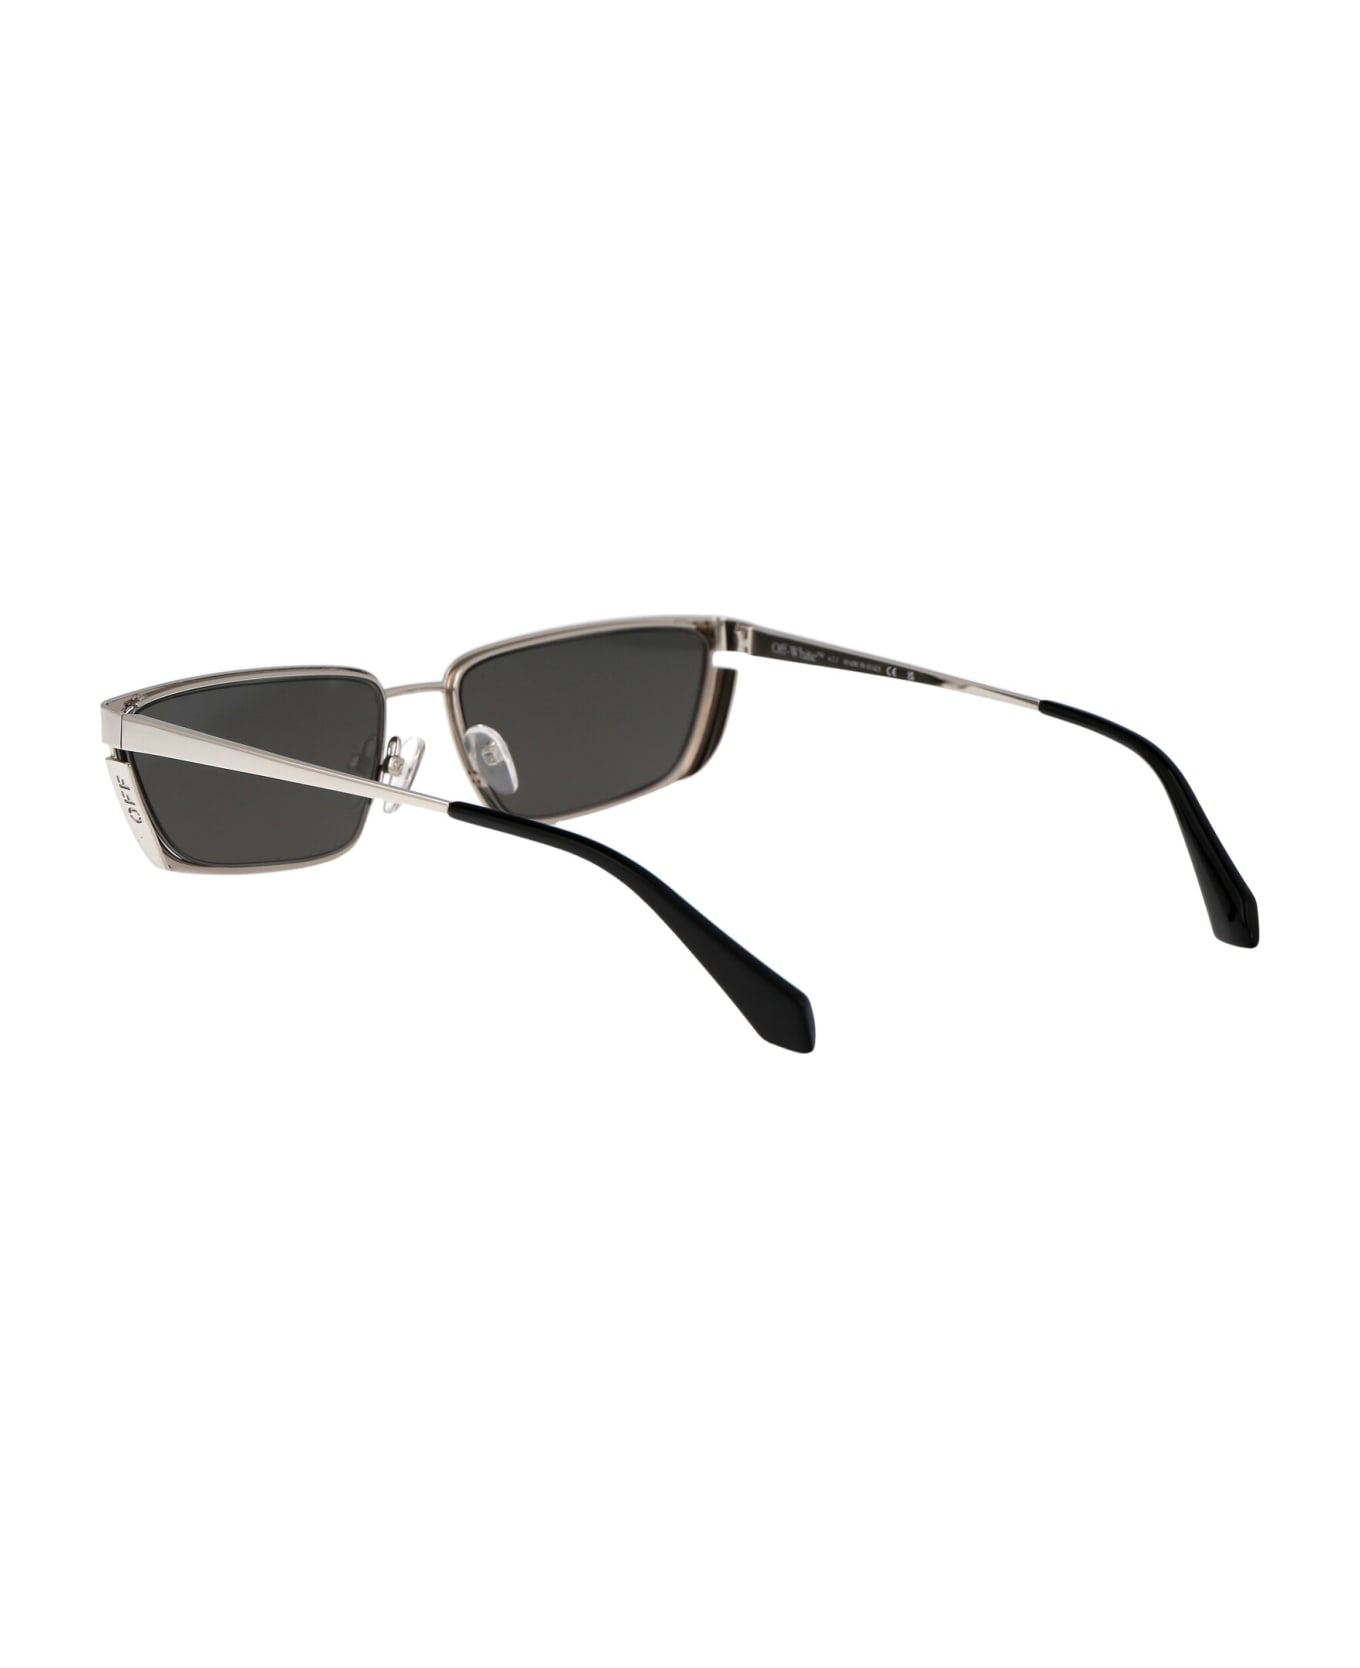 Off-White Richfield Sunglasses - 7272 SILVER SILVER サングラス